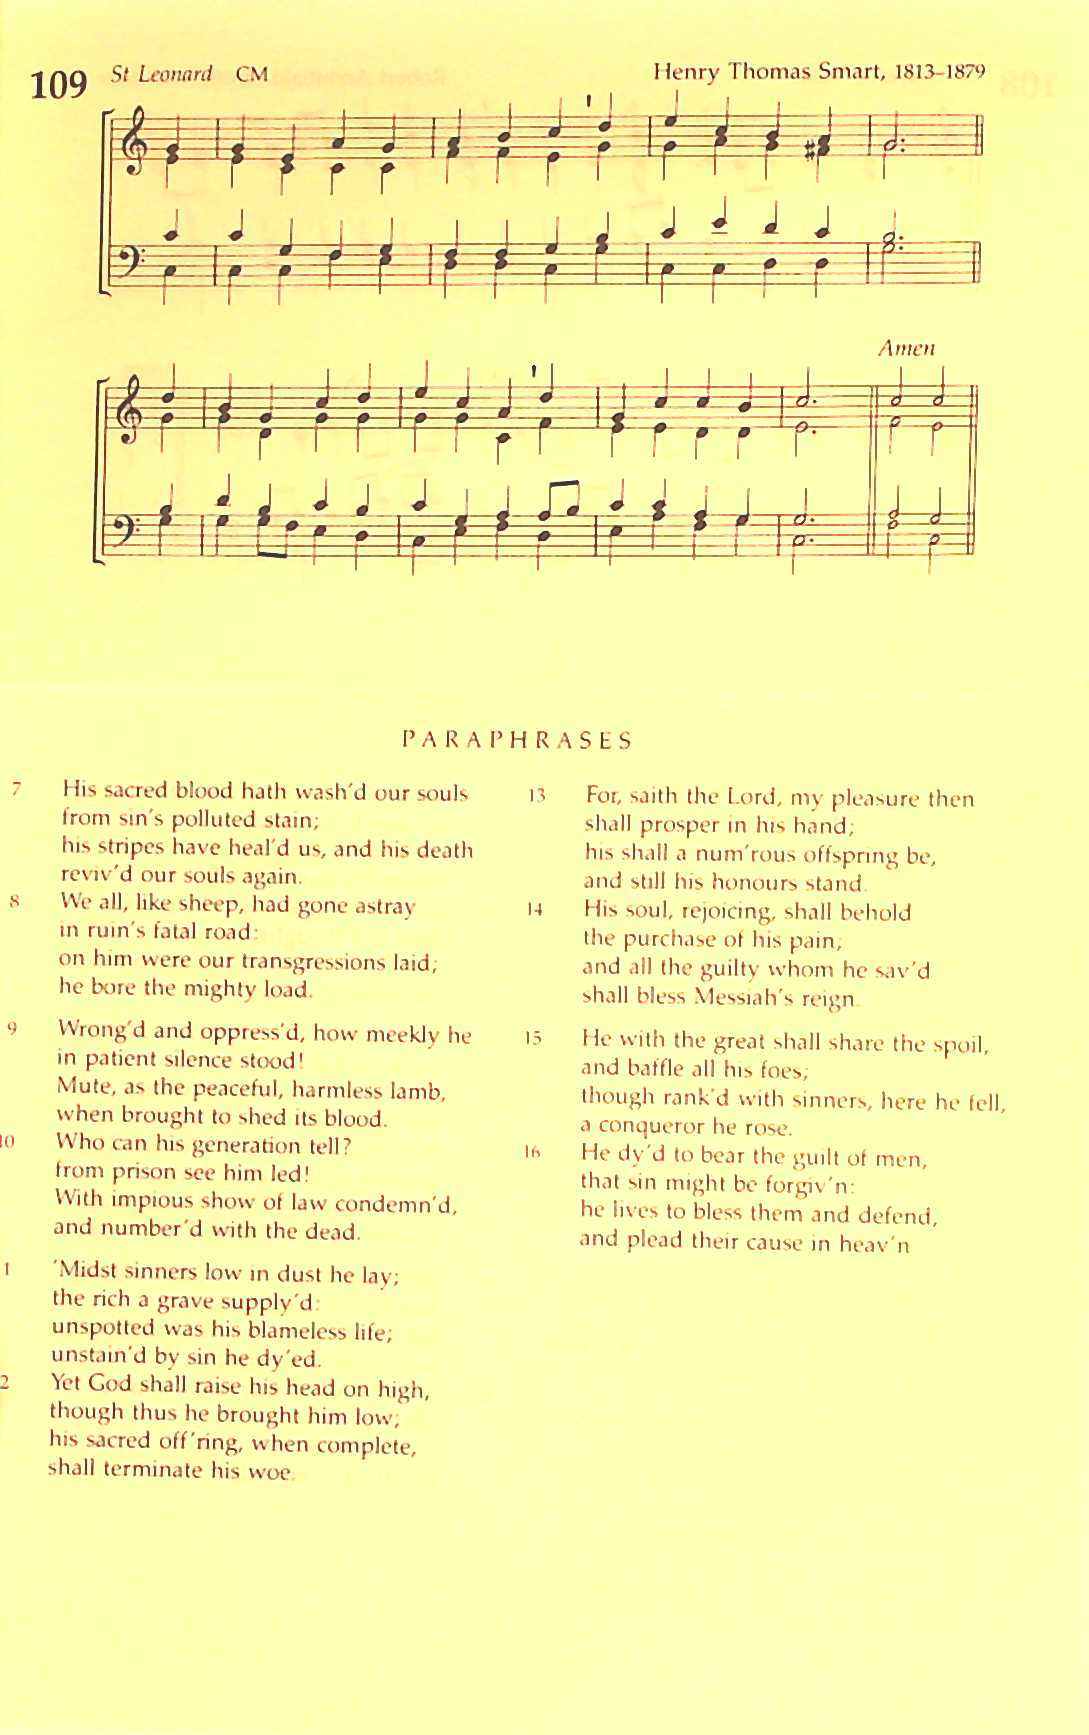 The Irish Presbyterian Hymbook page 668